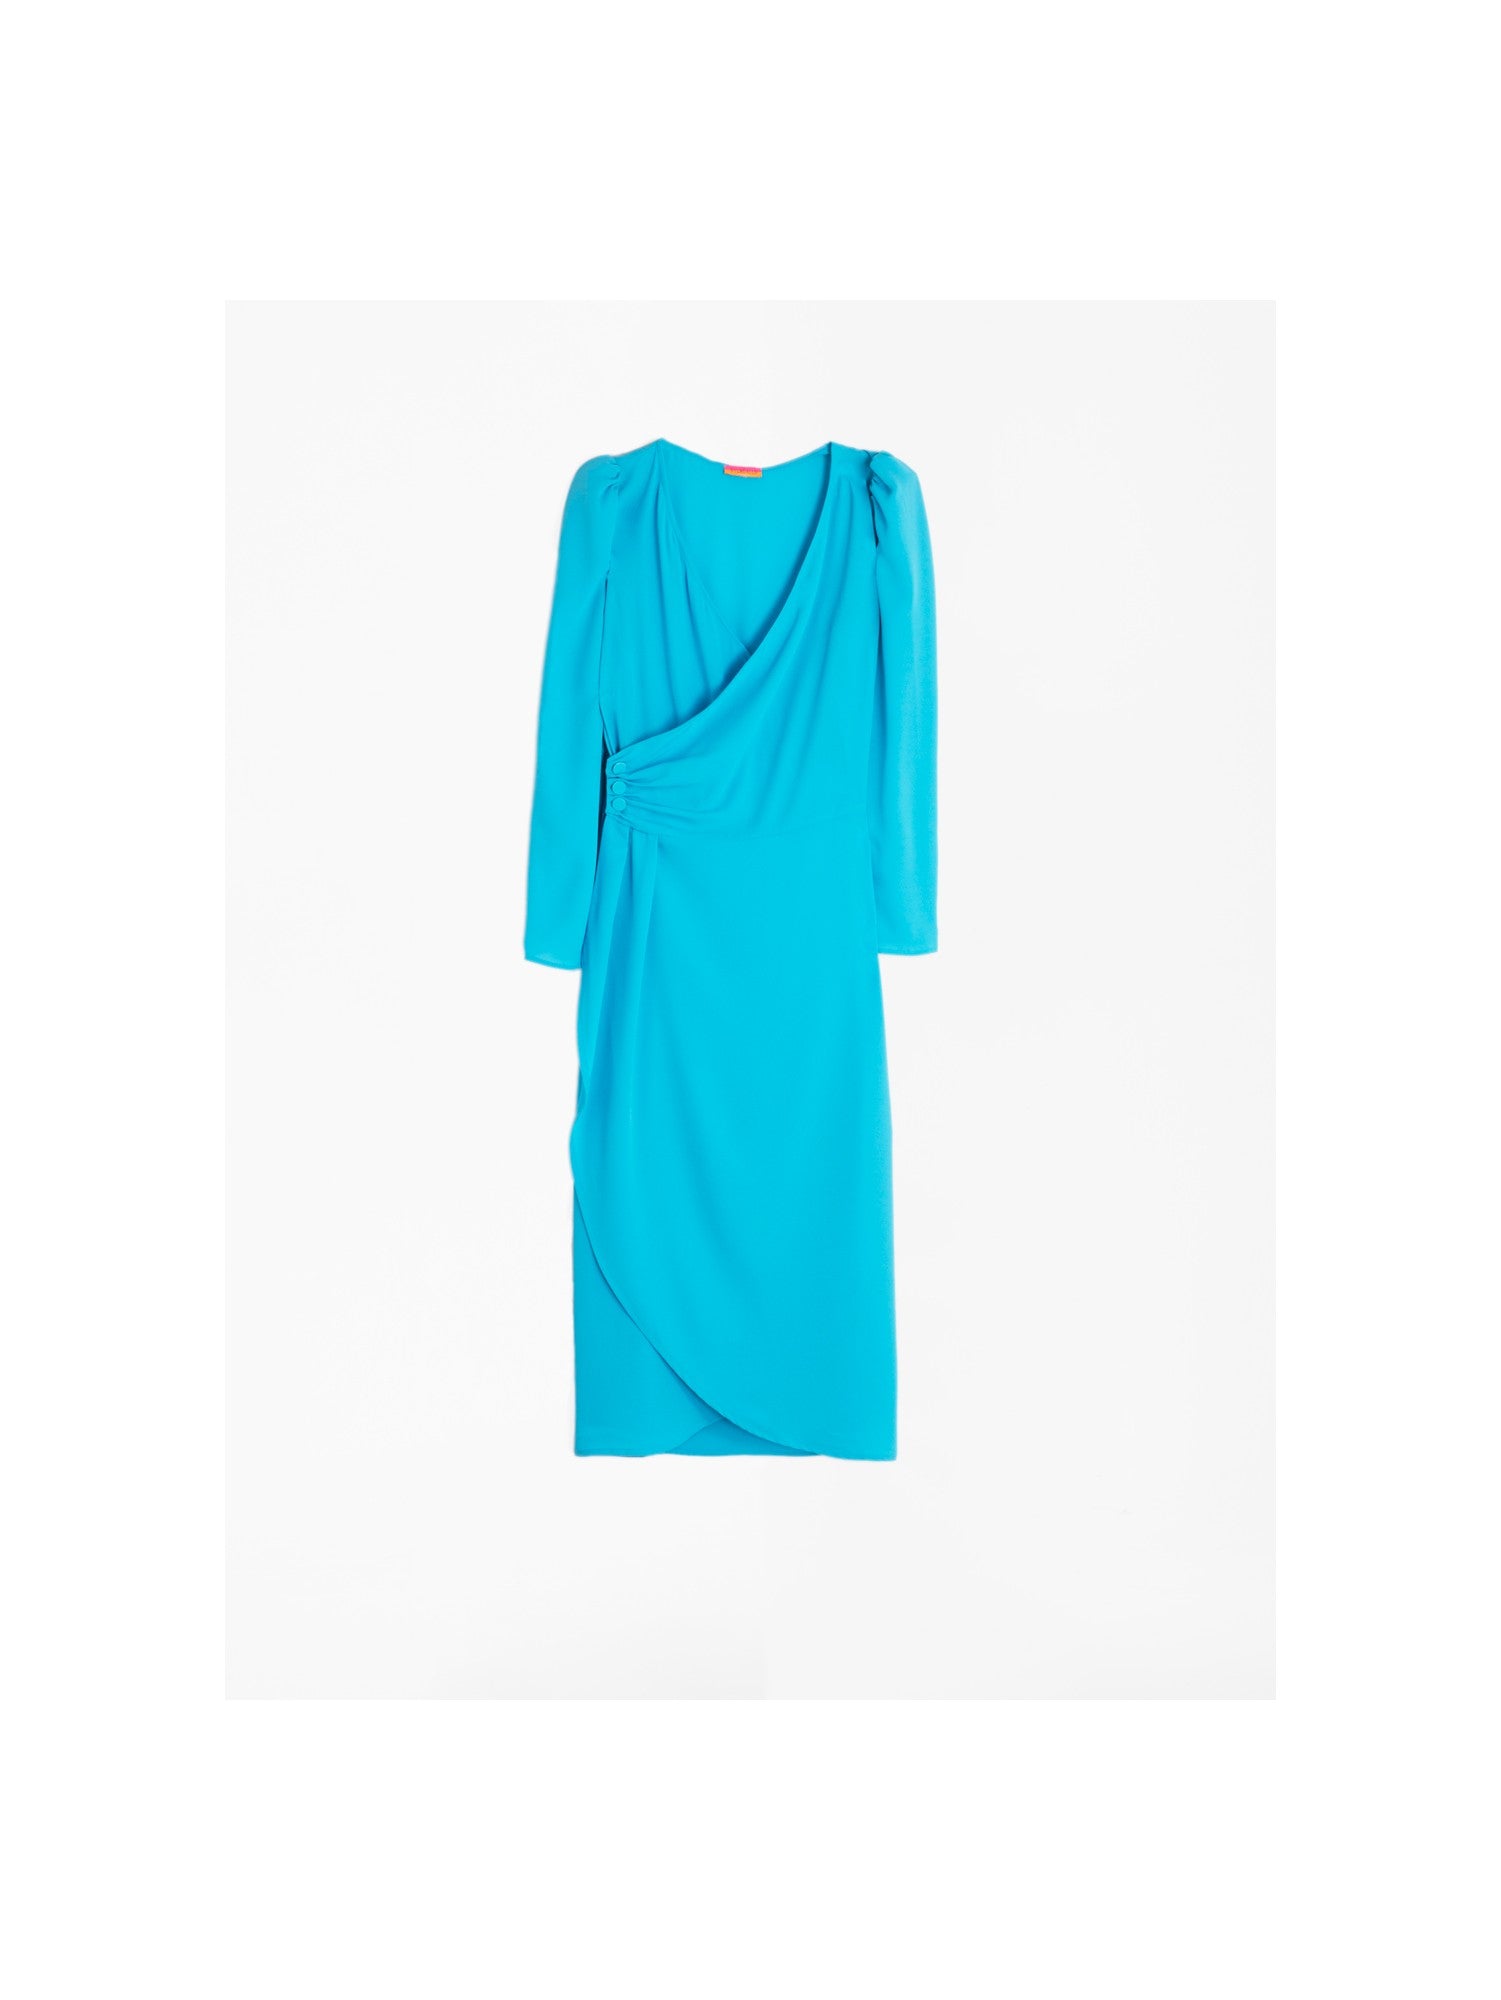 Virginie Dress in Turquoise Georgette - The Posh Loft